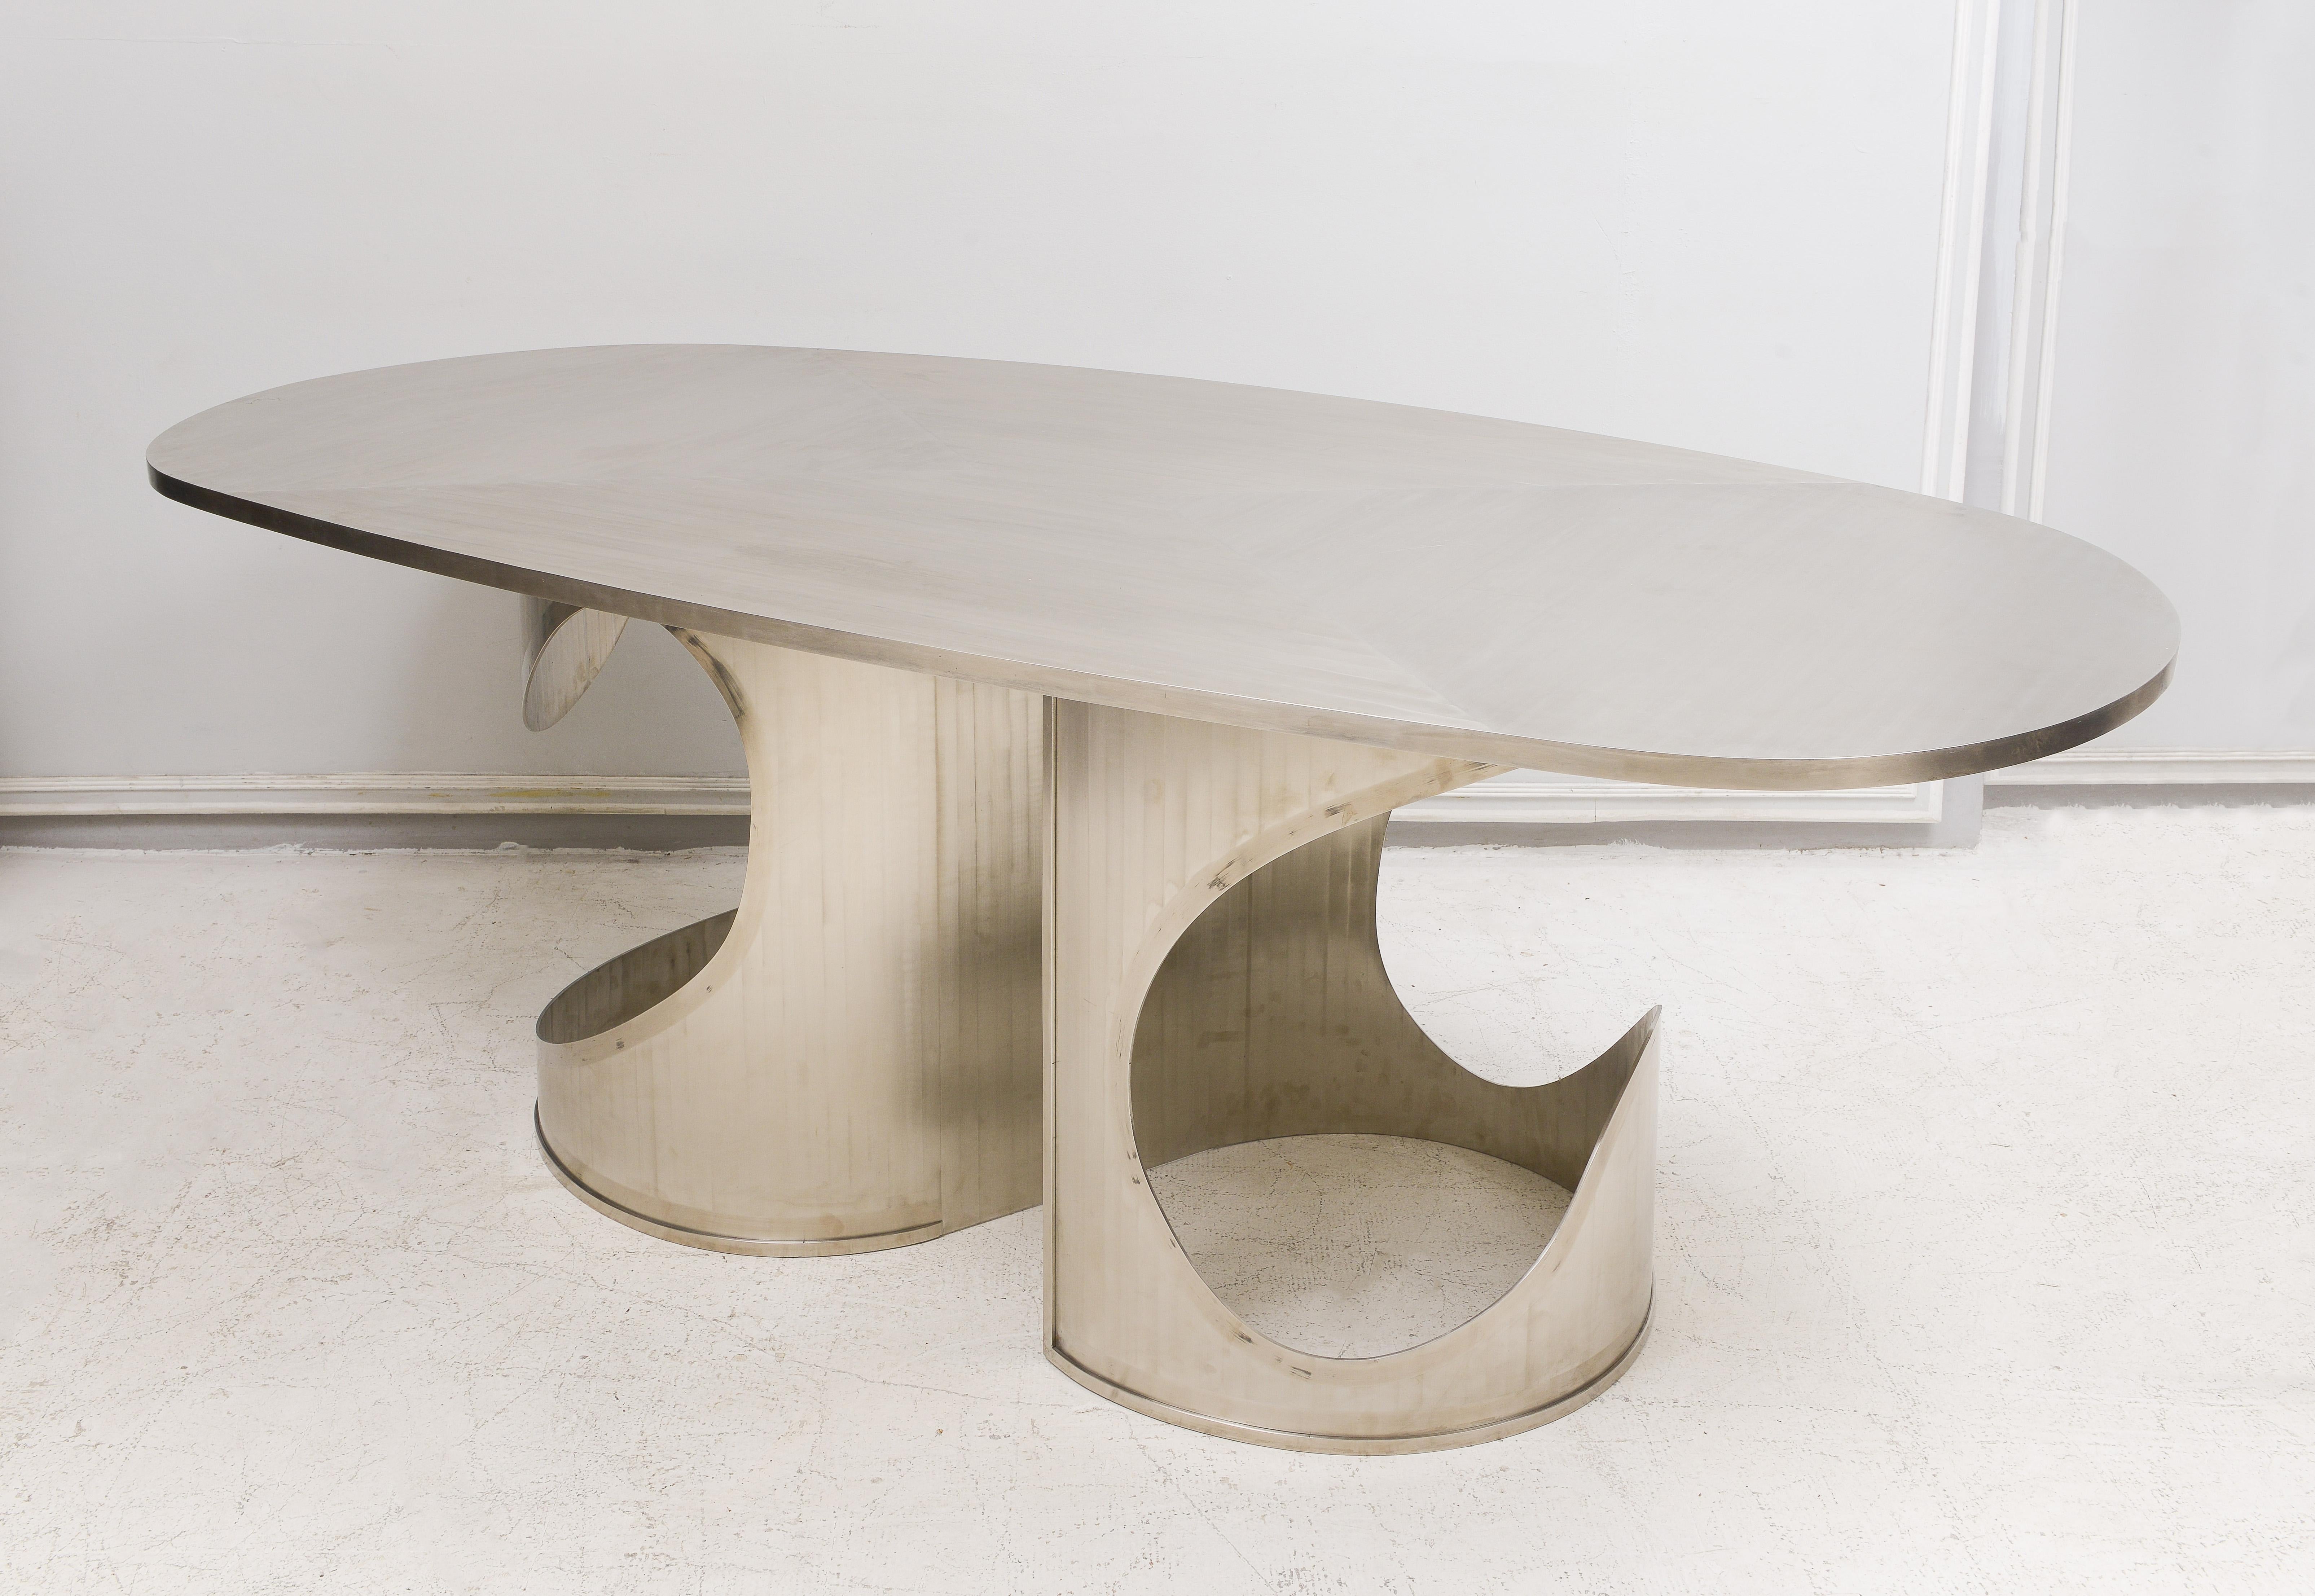 Table sculpturale en acier inoxydable à la manière de Maria Pergay.
 